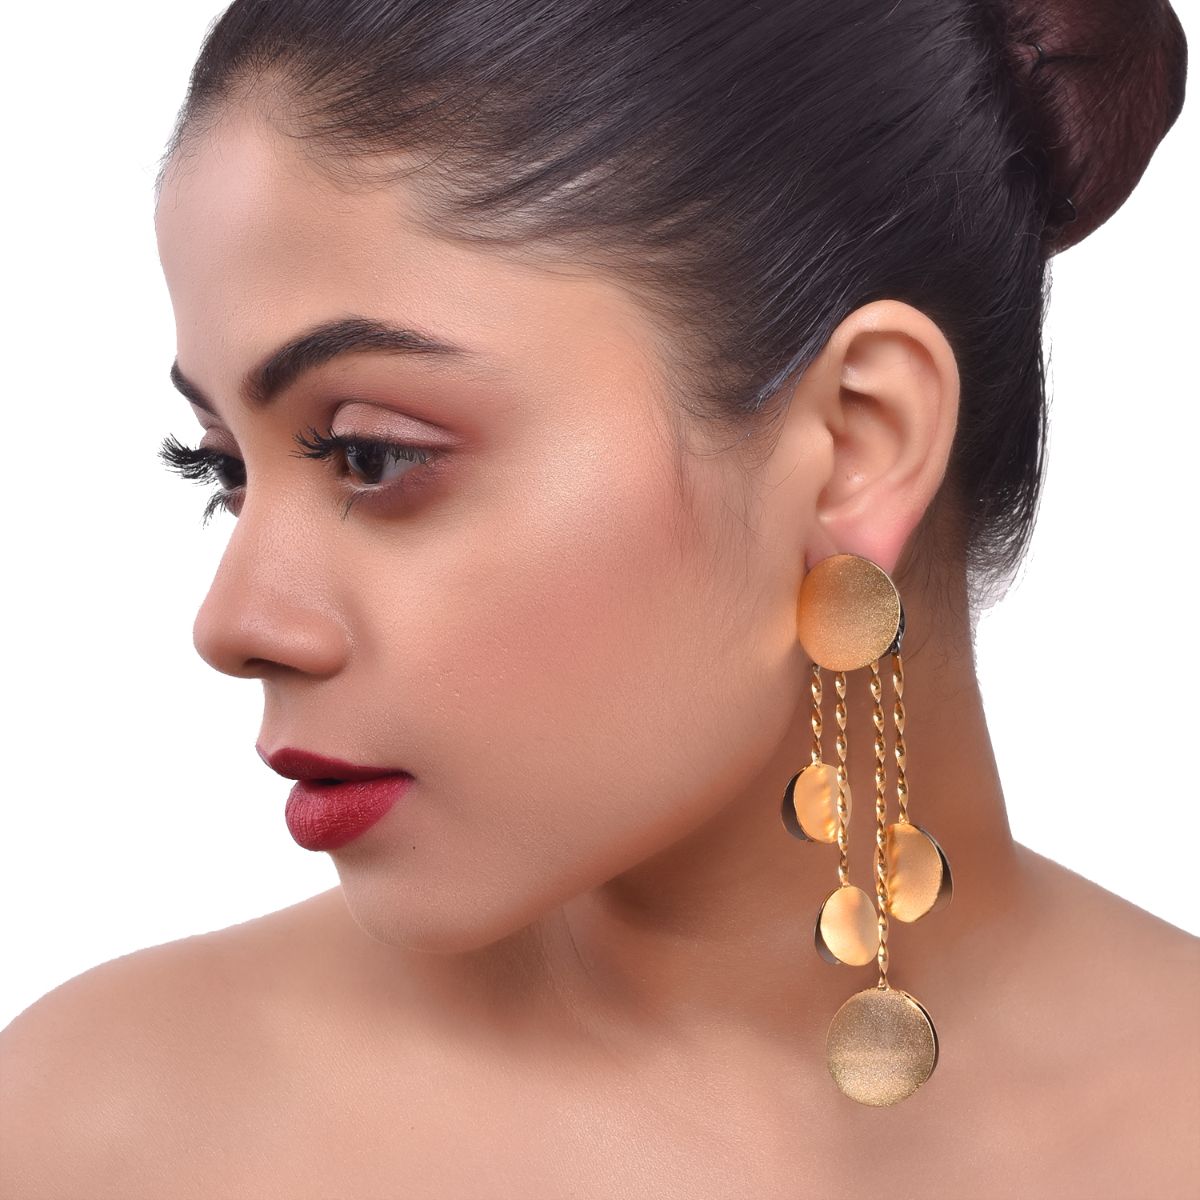 Women long chain drop earrings gold